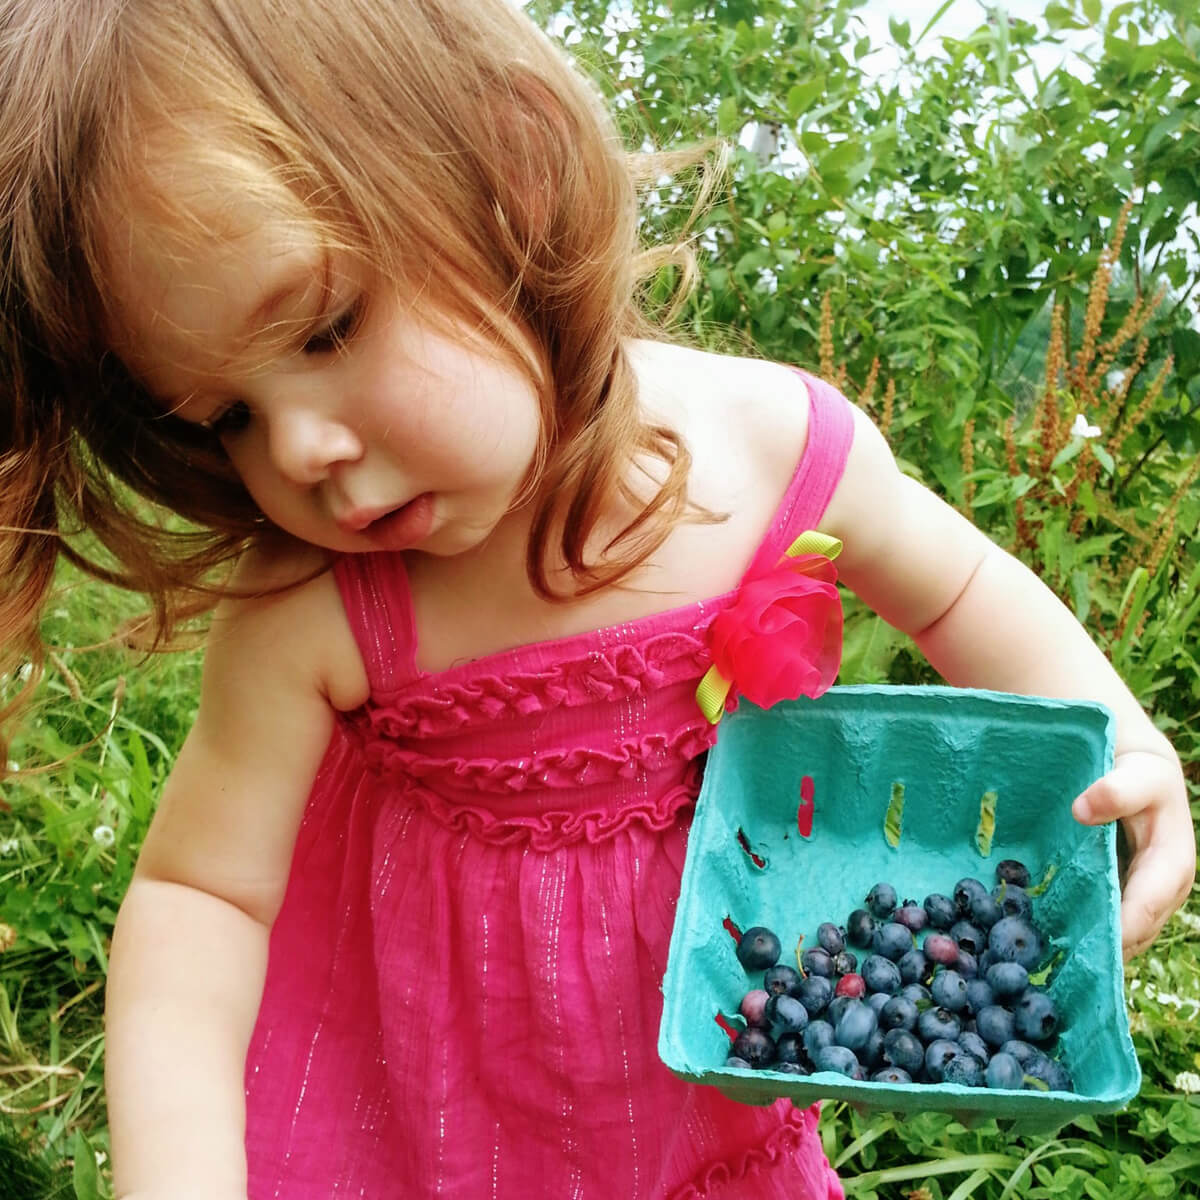 Little girl in a pink dress picking fresh blueberries